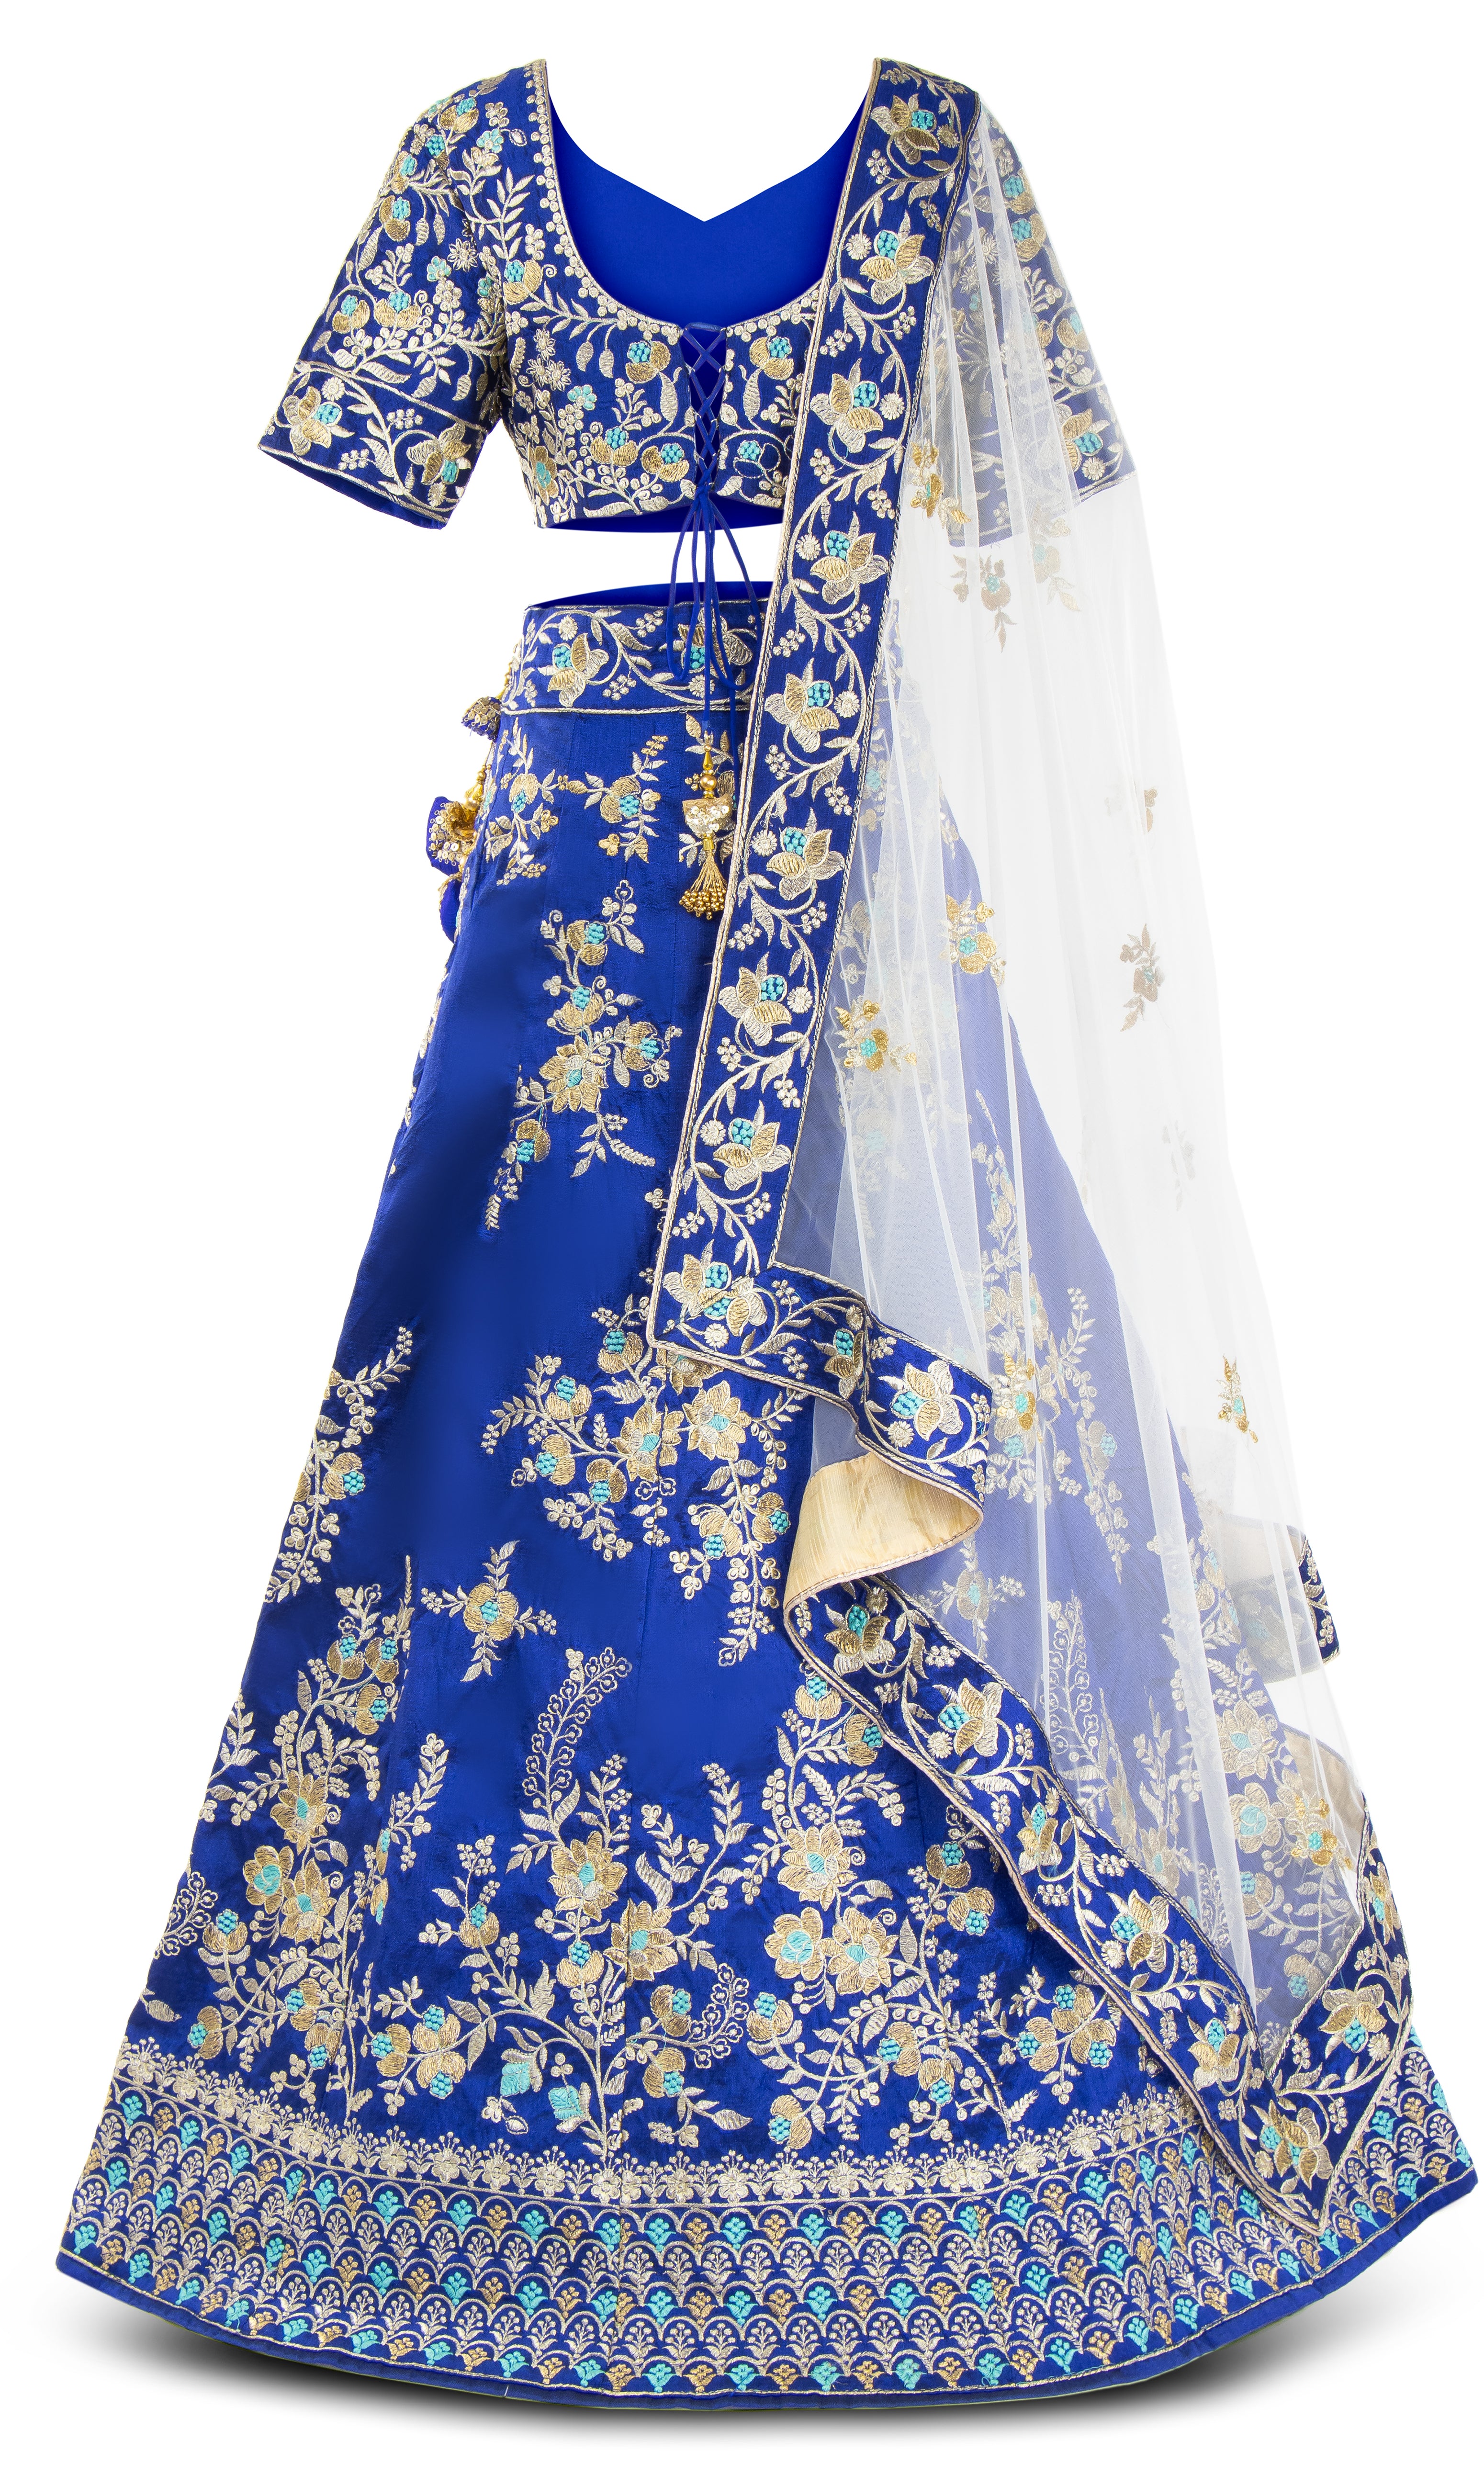 Blue legenga with matching skirt and white net dupatta